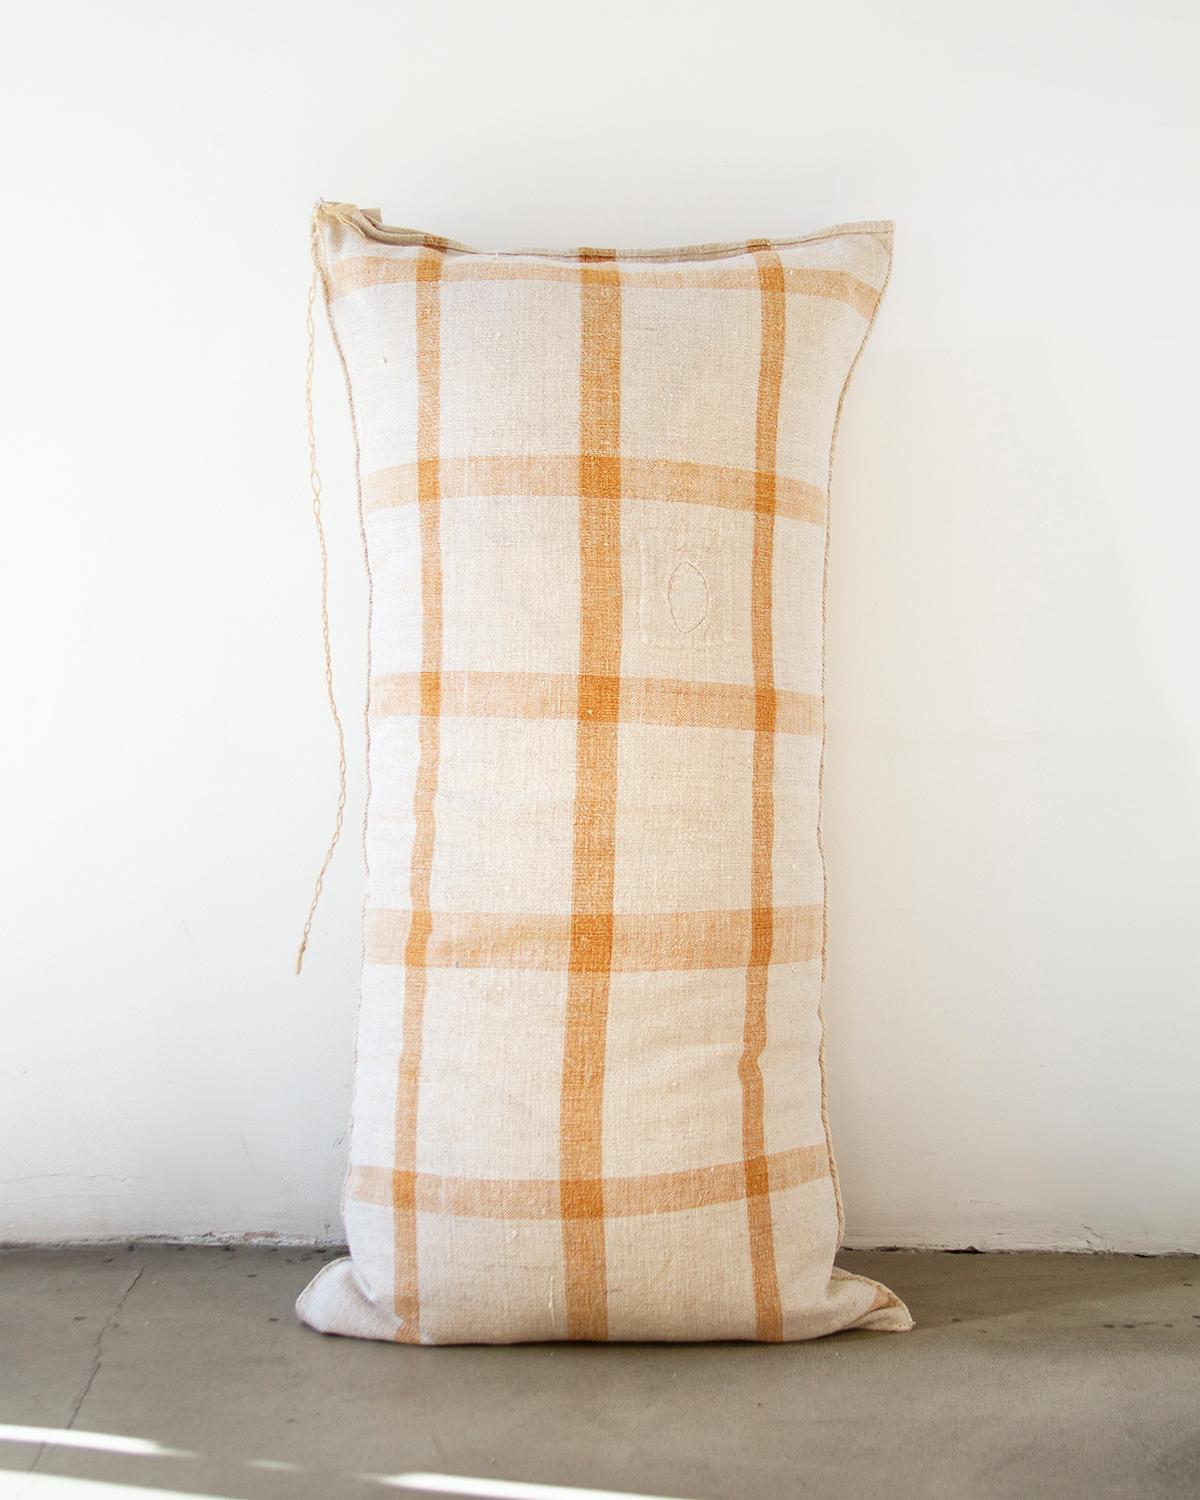 Rustic Matilde Mustard Oversized Lumbar Throw Pillow made from Vintage Linen For Sale